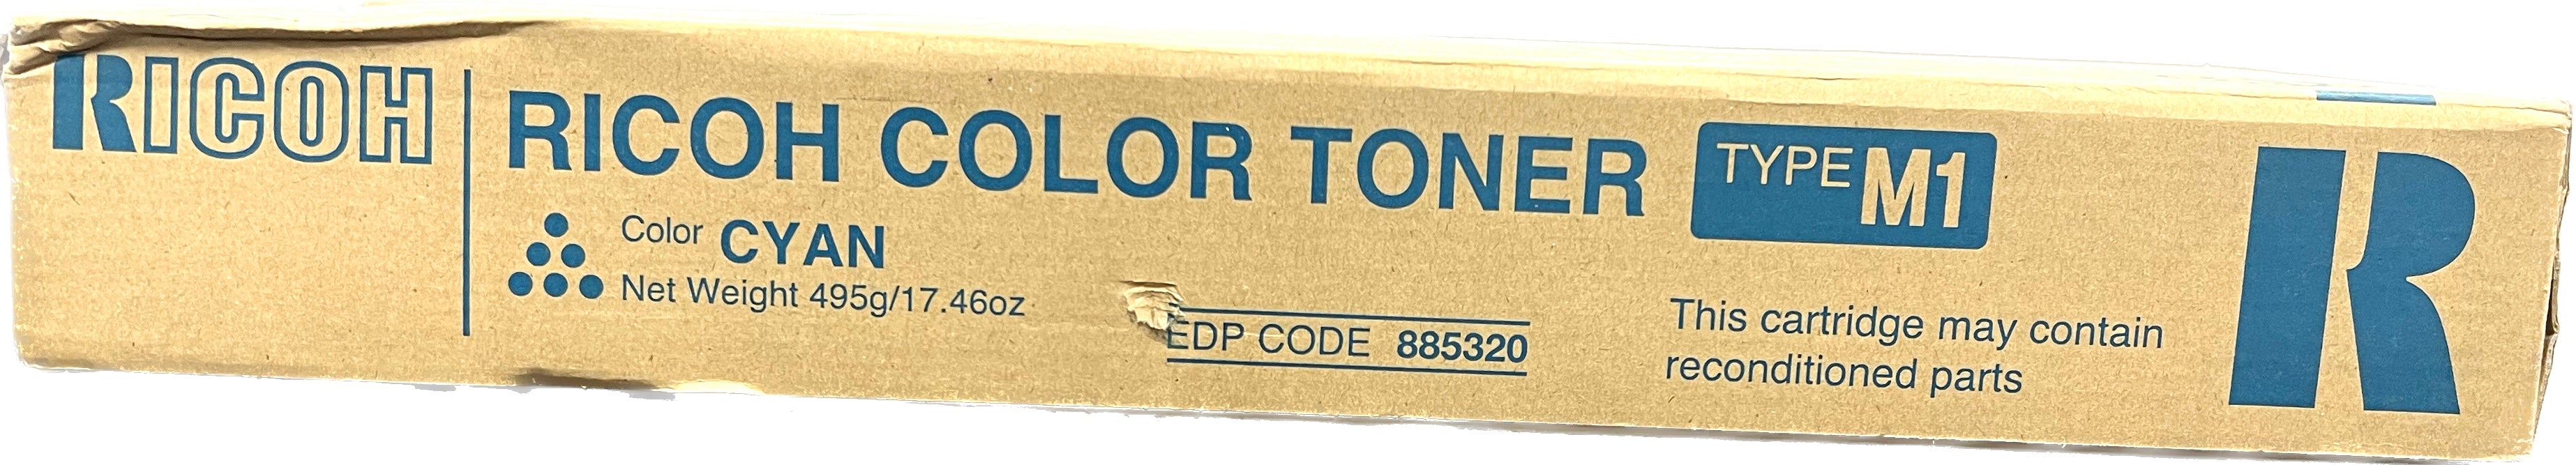 Genuine Ricoh Cyan Color Toner | 885320 | Type M1